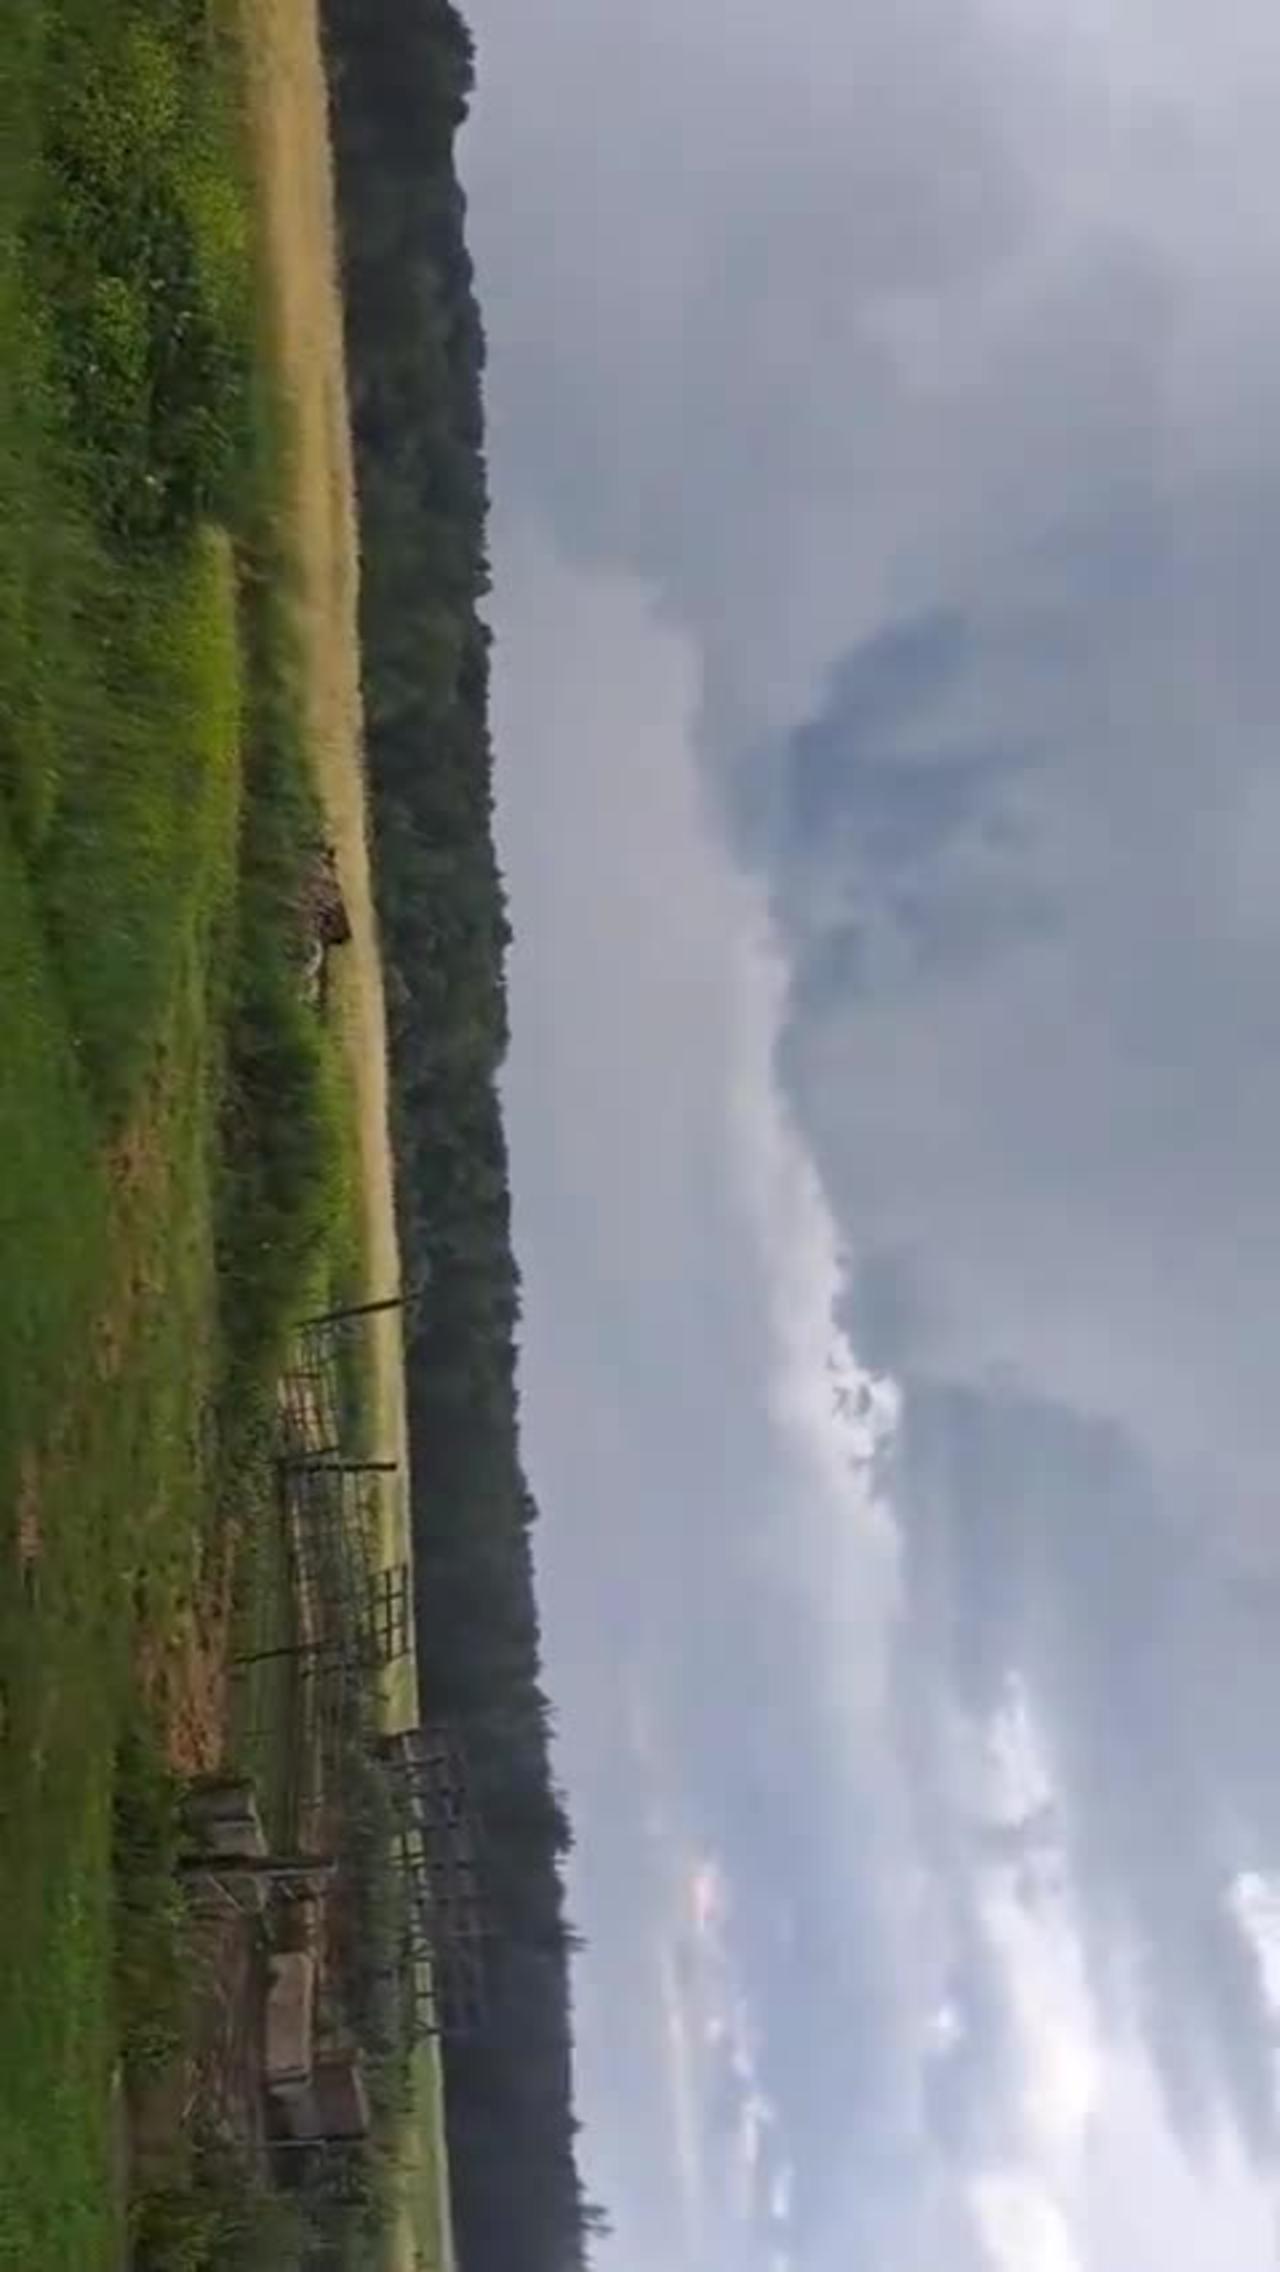 Video shows Confirmed tornado near Silver Creek